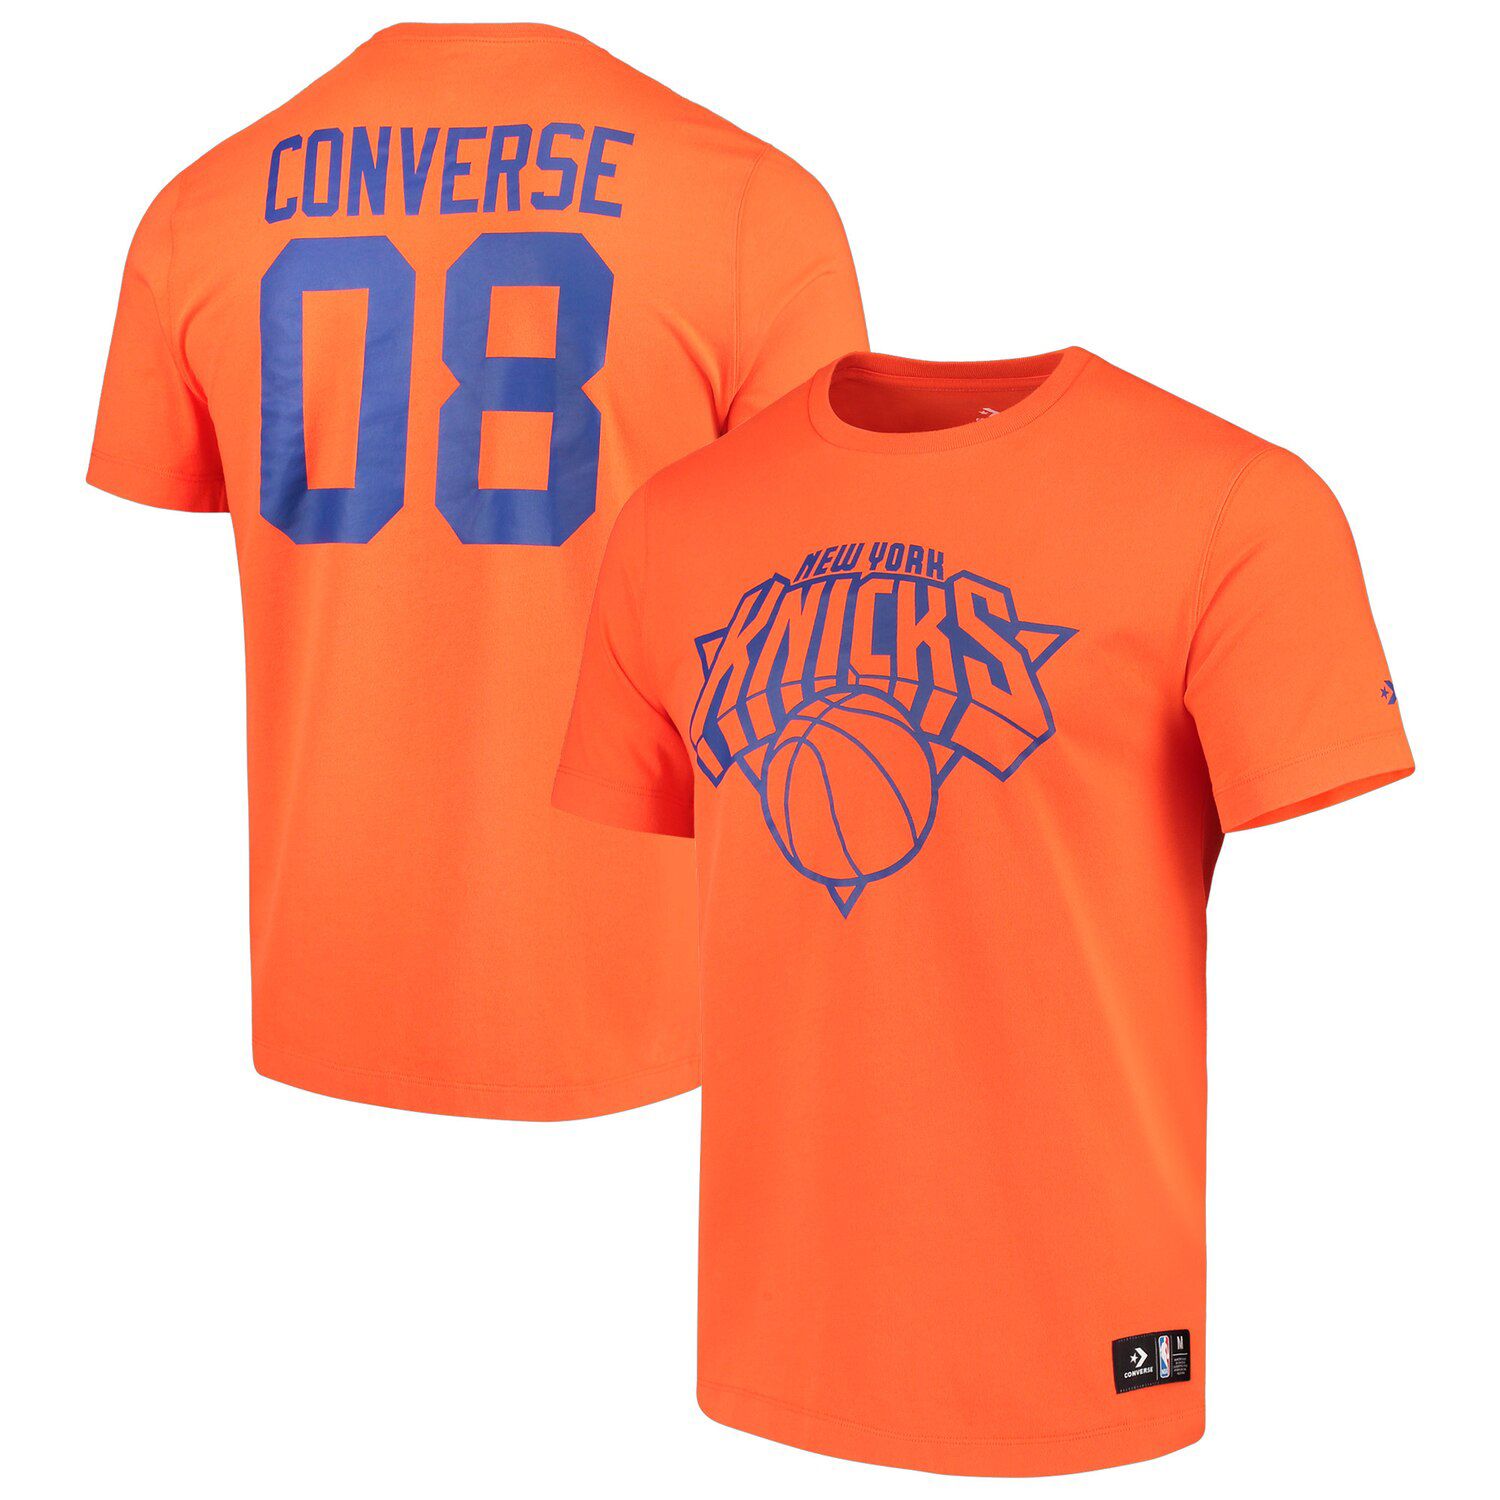 converse orange shirt